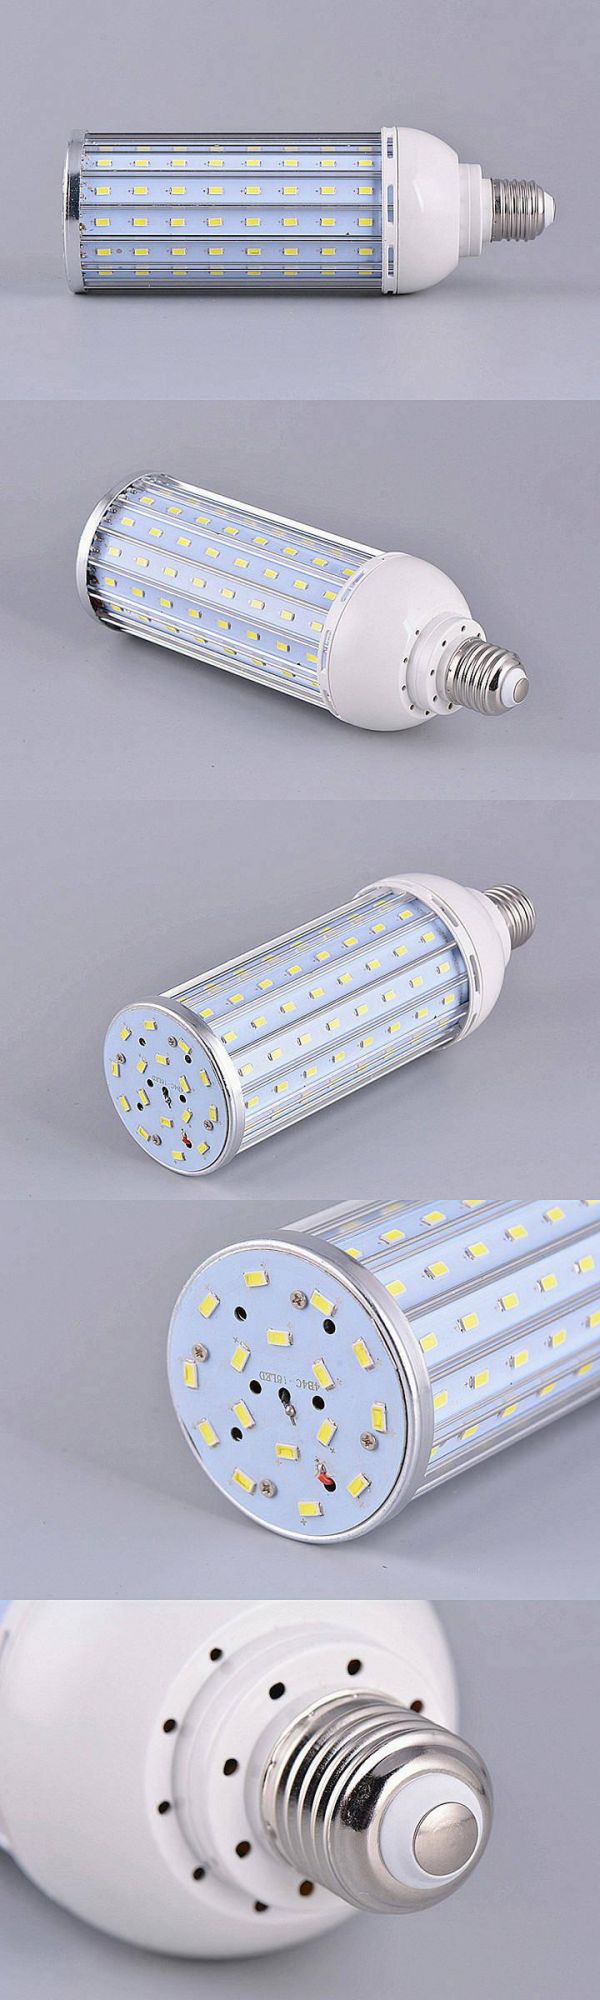 China Supplier 360 Degree COB Light 5W-50W B22 LED Corn Bulbs